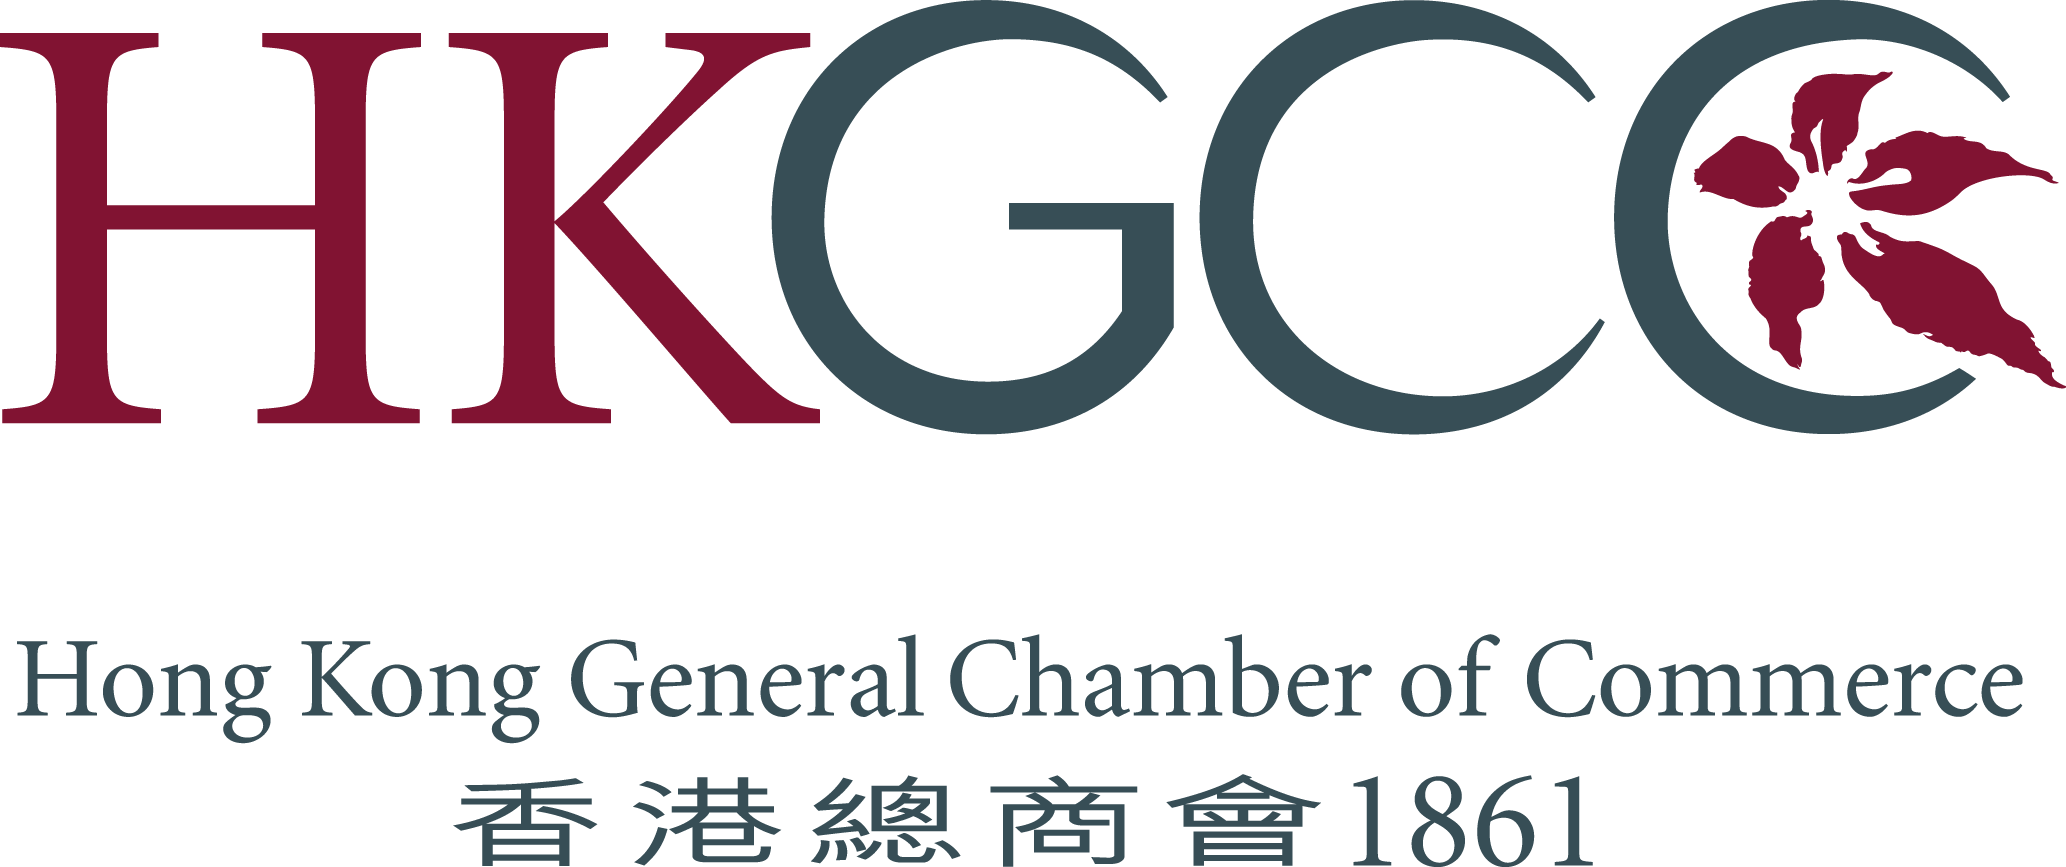 hkgcc logo